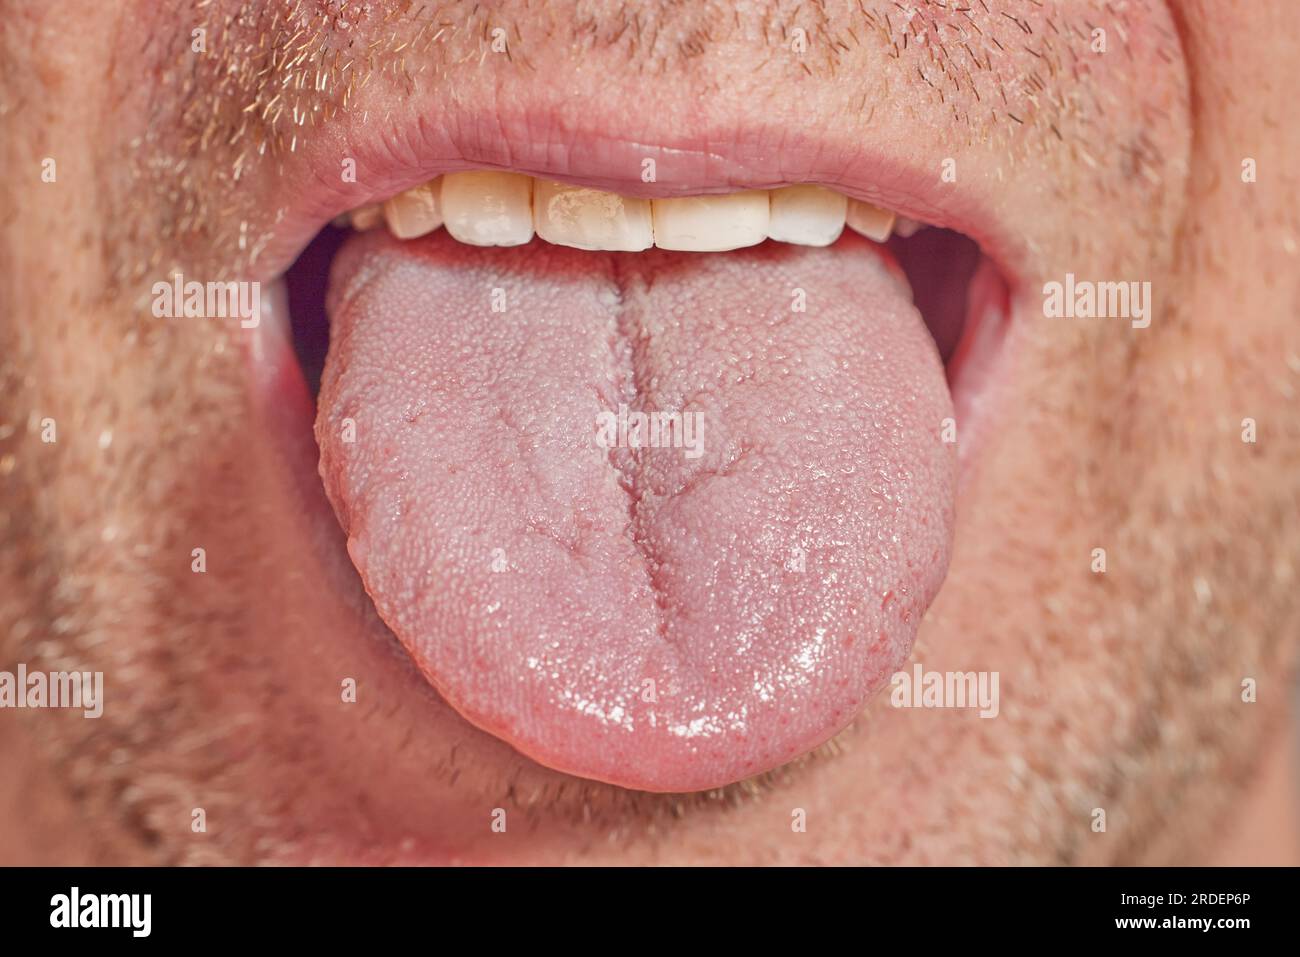 Closeup of male tounge with light beard Stock Photo